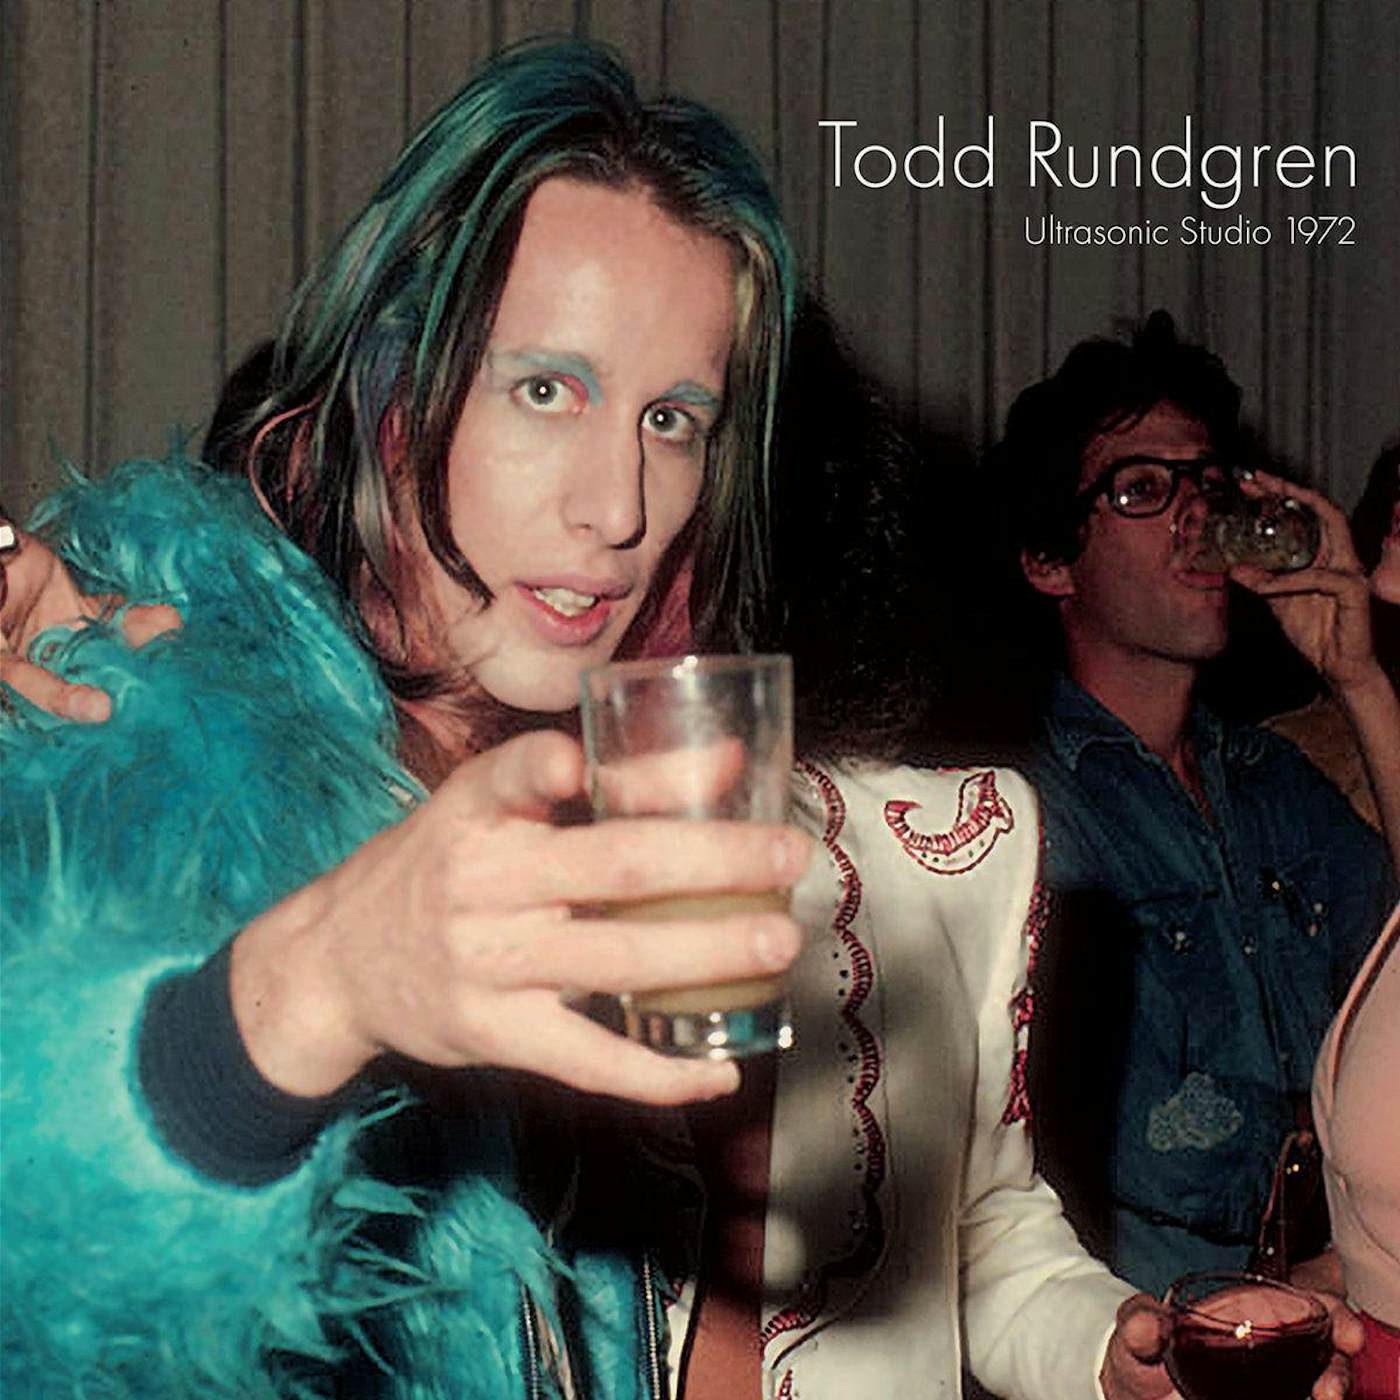 Todd Rundgren Ultrasonic Studio 1972 (Green) Vinyl Record